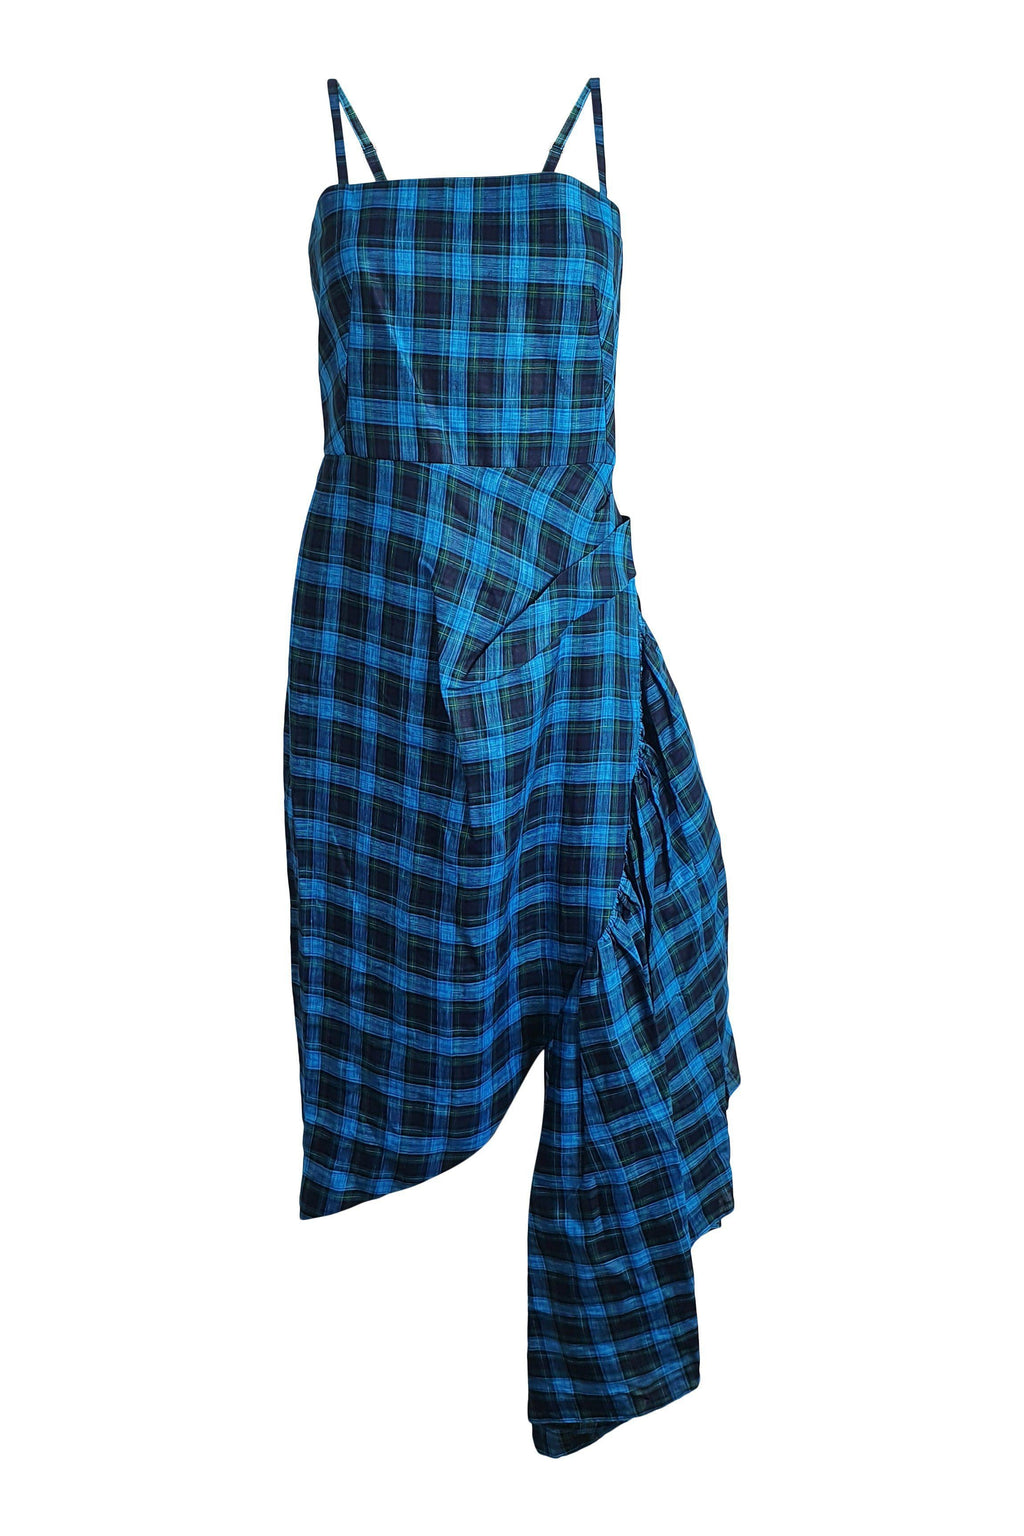 OSMAN LONDON SS 2019 100% Cotton Blue Gingham Corset Dress (UK 08)-The Freperie